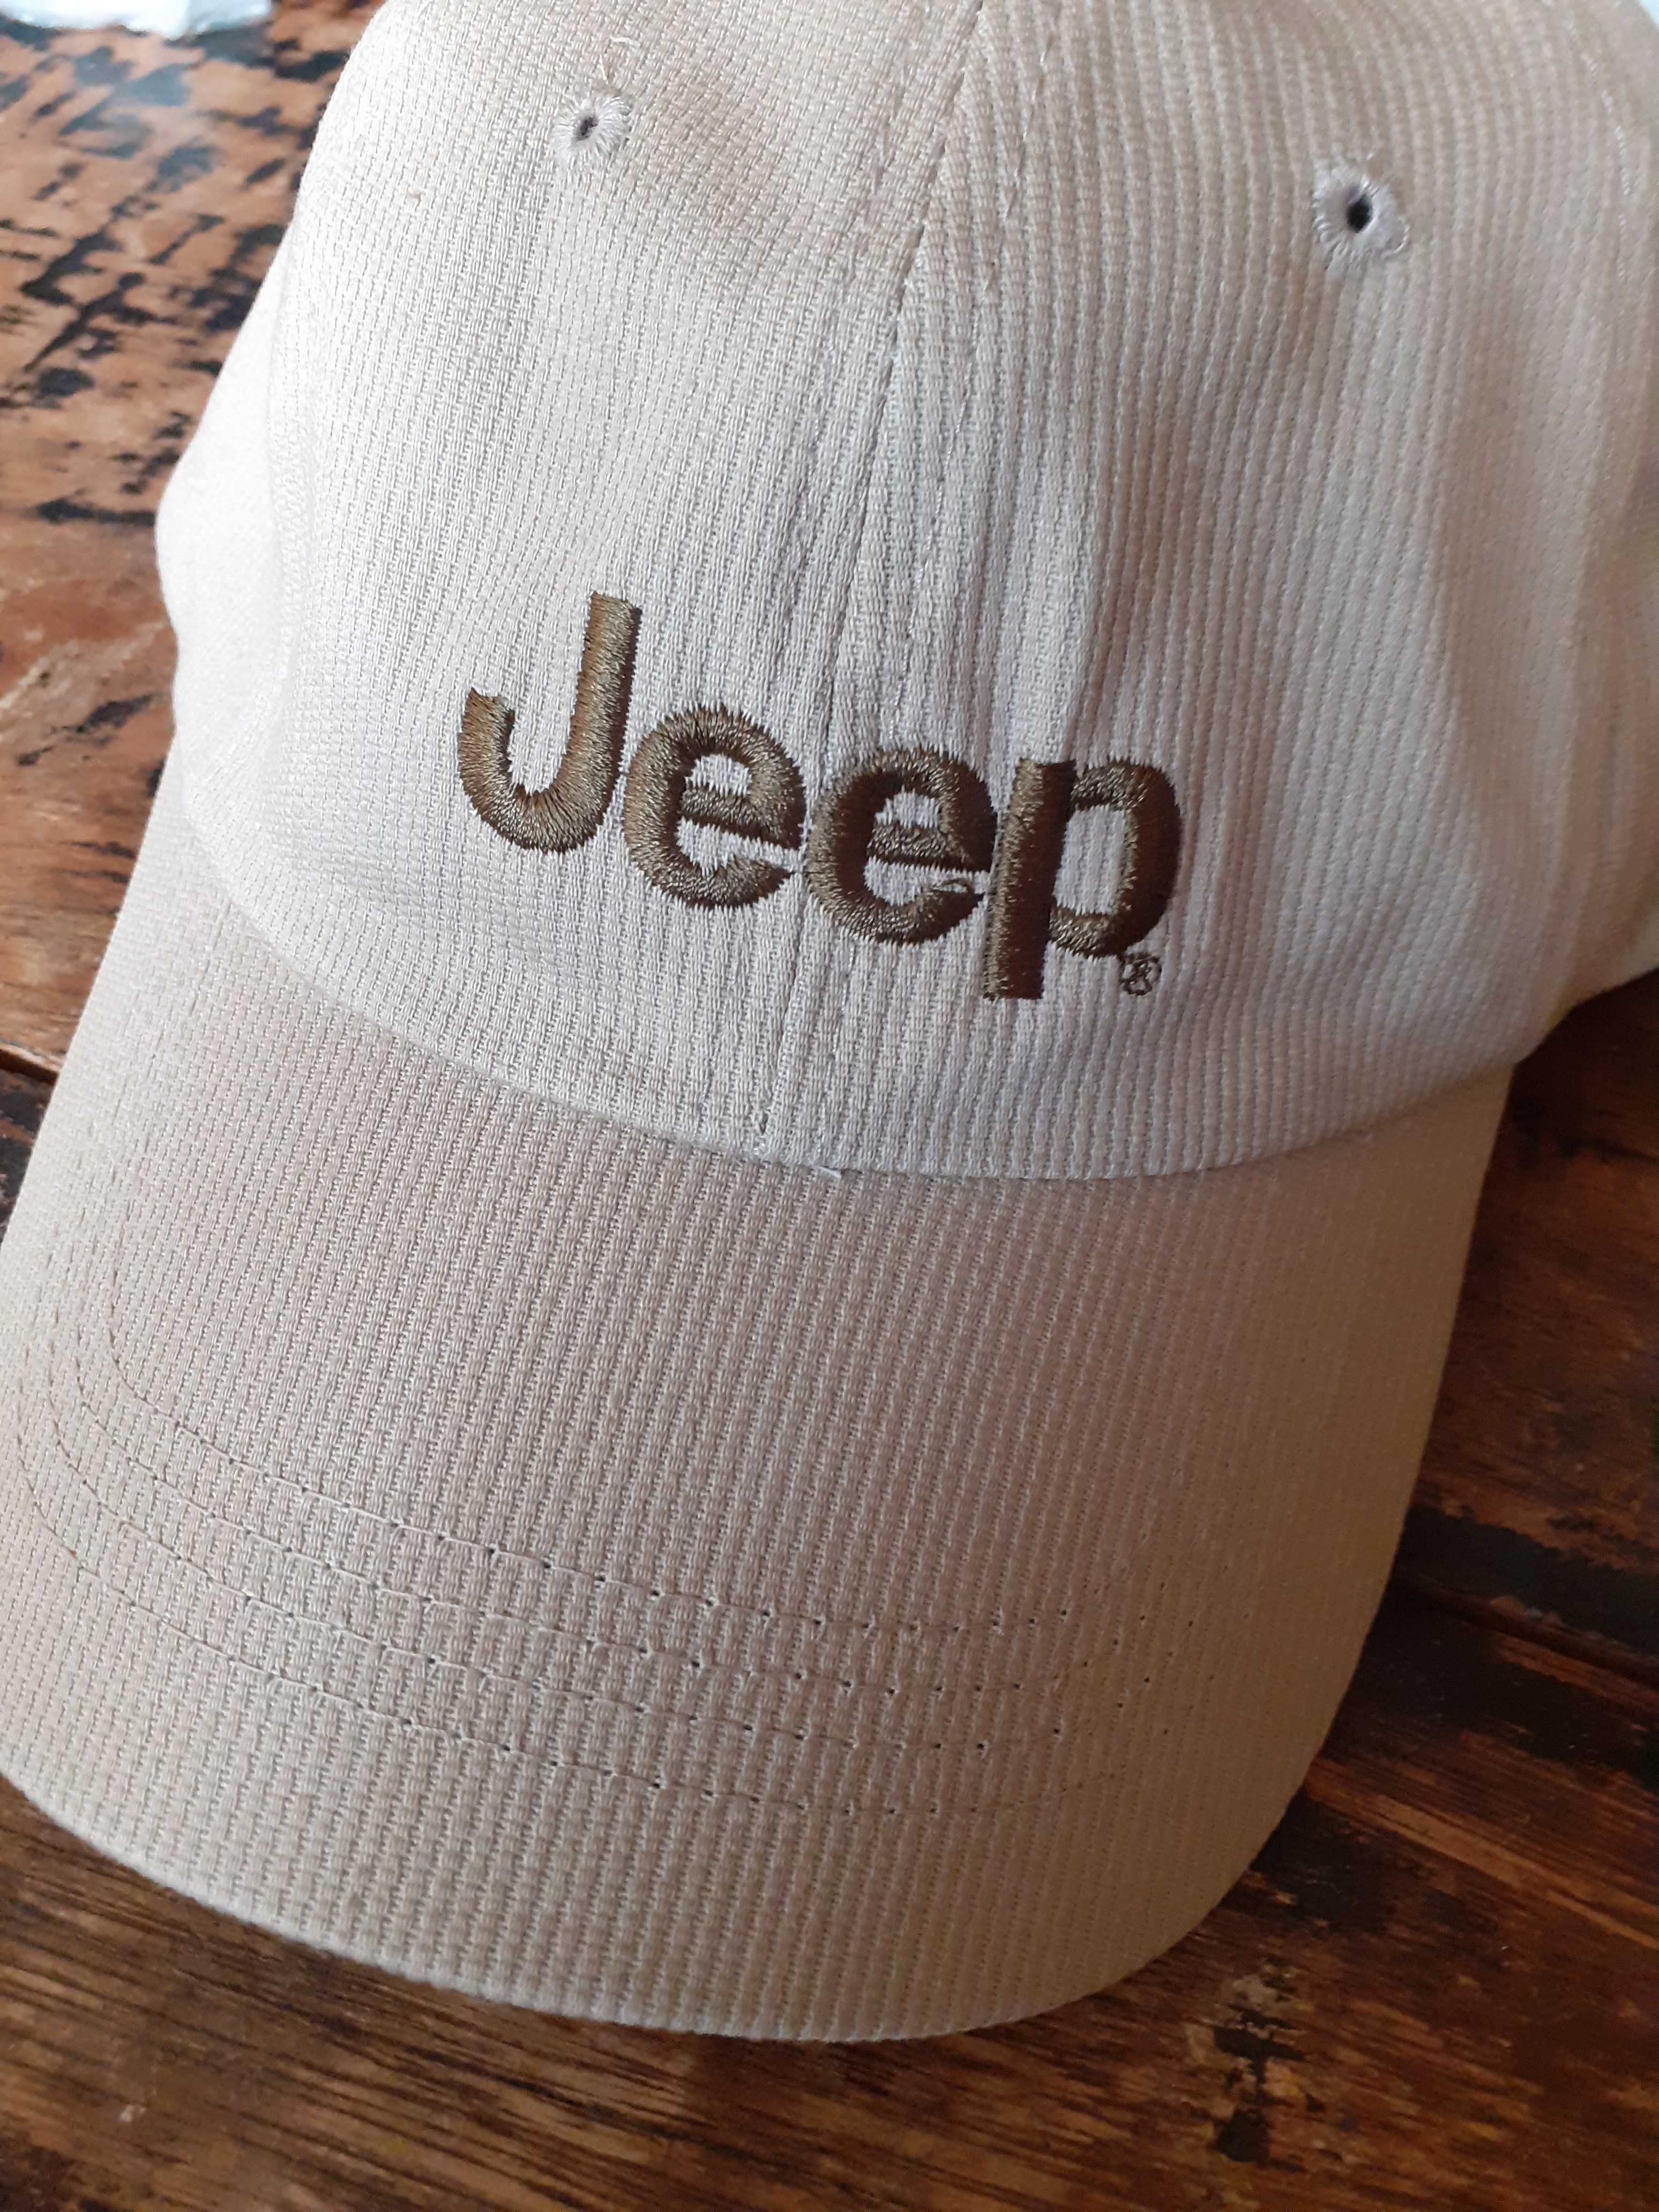 шапка бейзболна с бродерия ДЖИИП Jeep чисто нови